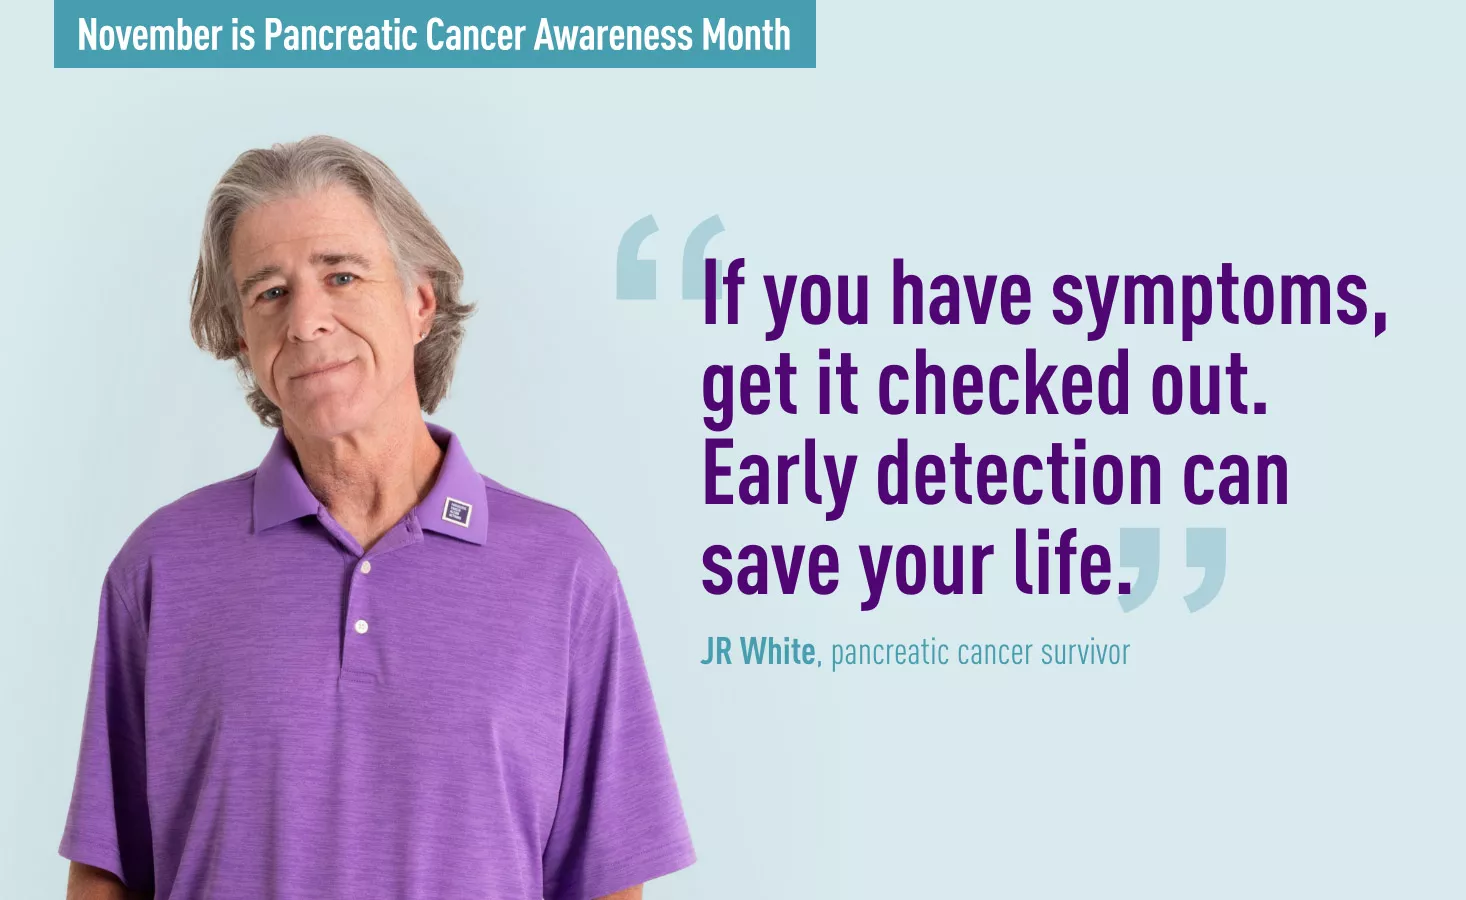 Pancreatic cancer survivor JR White